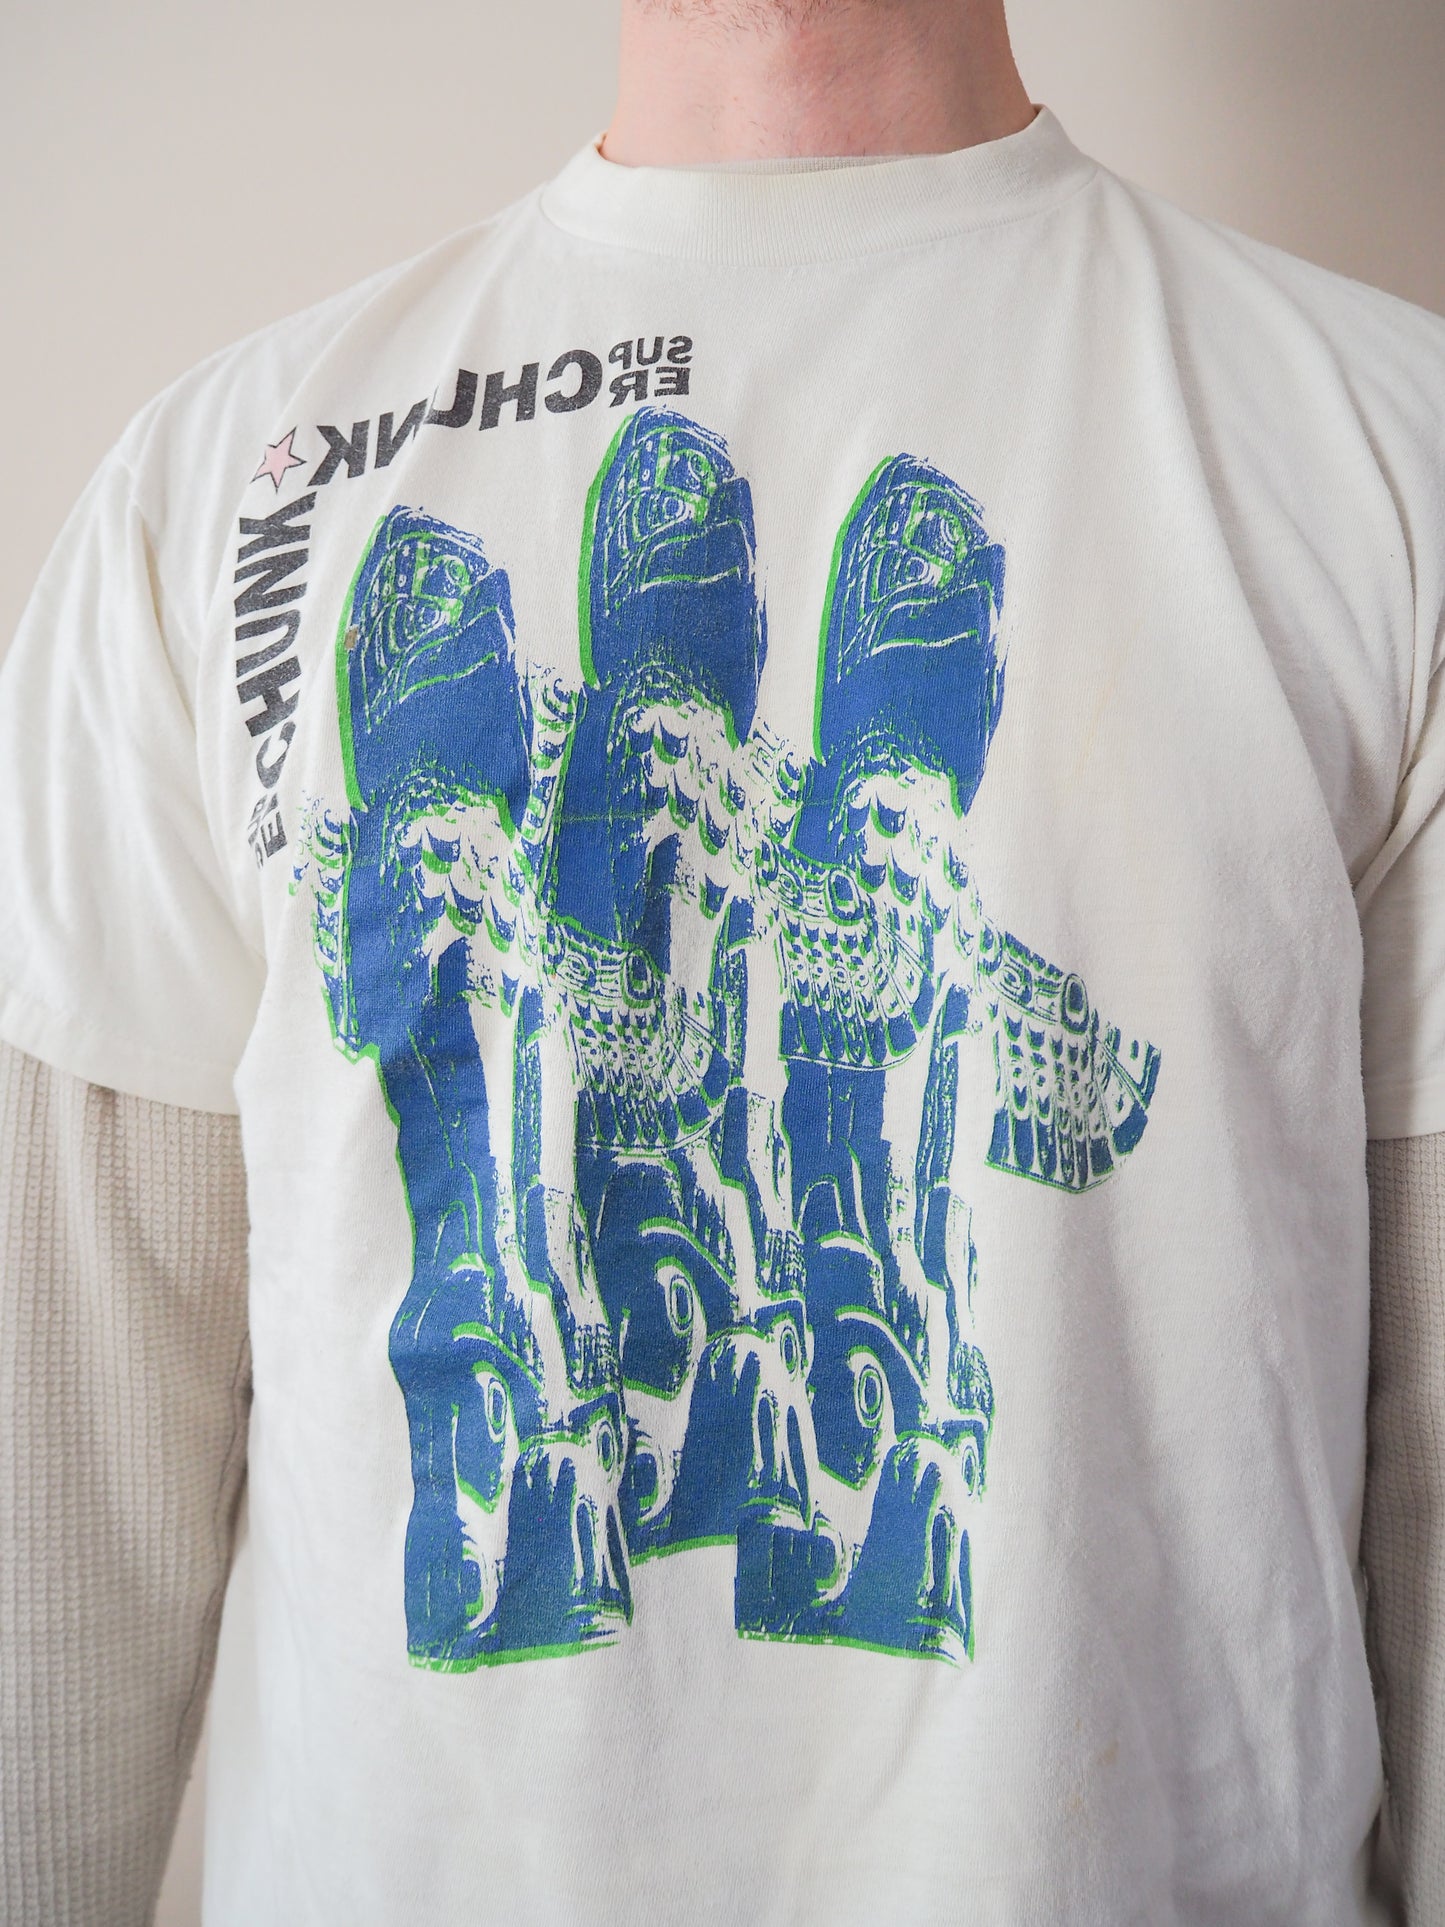 90s Superchunk "Tannis Root" t-shirt